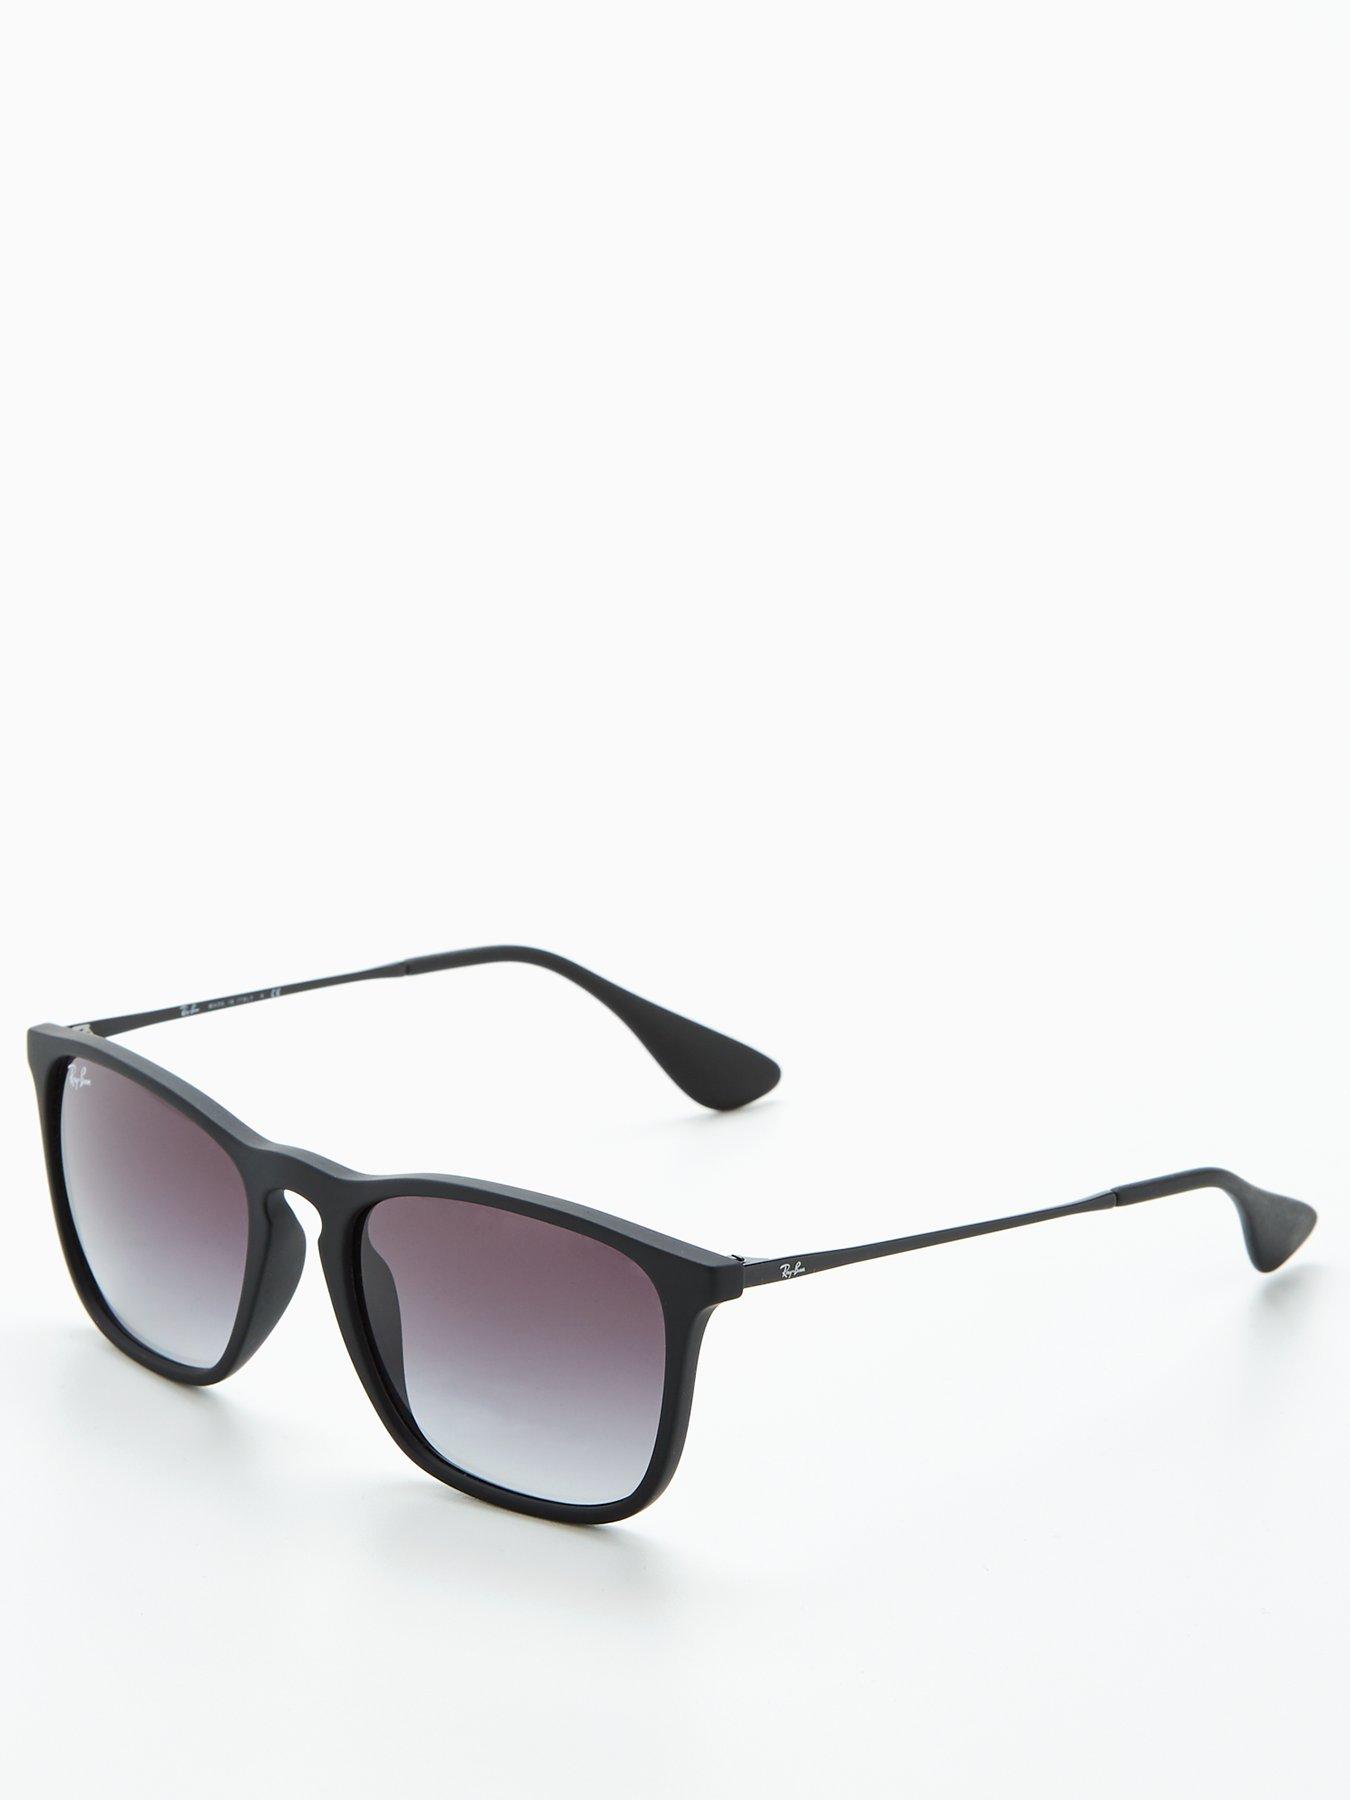  Chris Square Sunglasses - Rubber Black